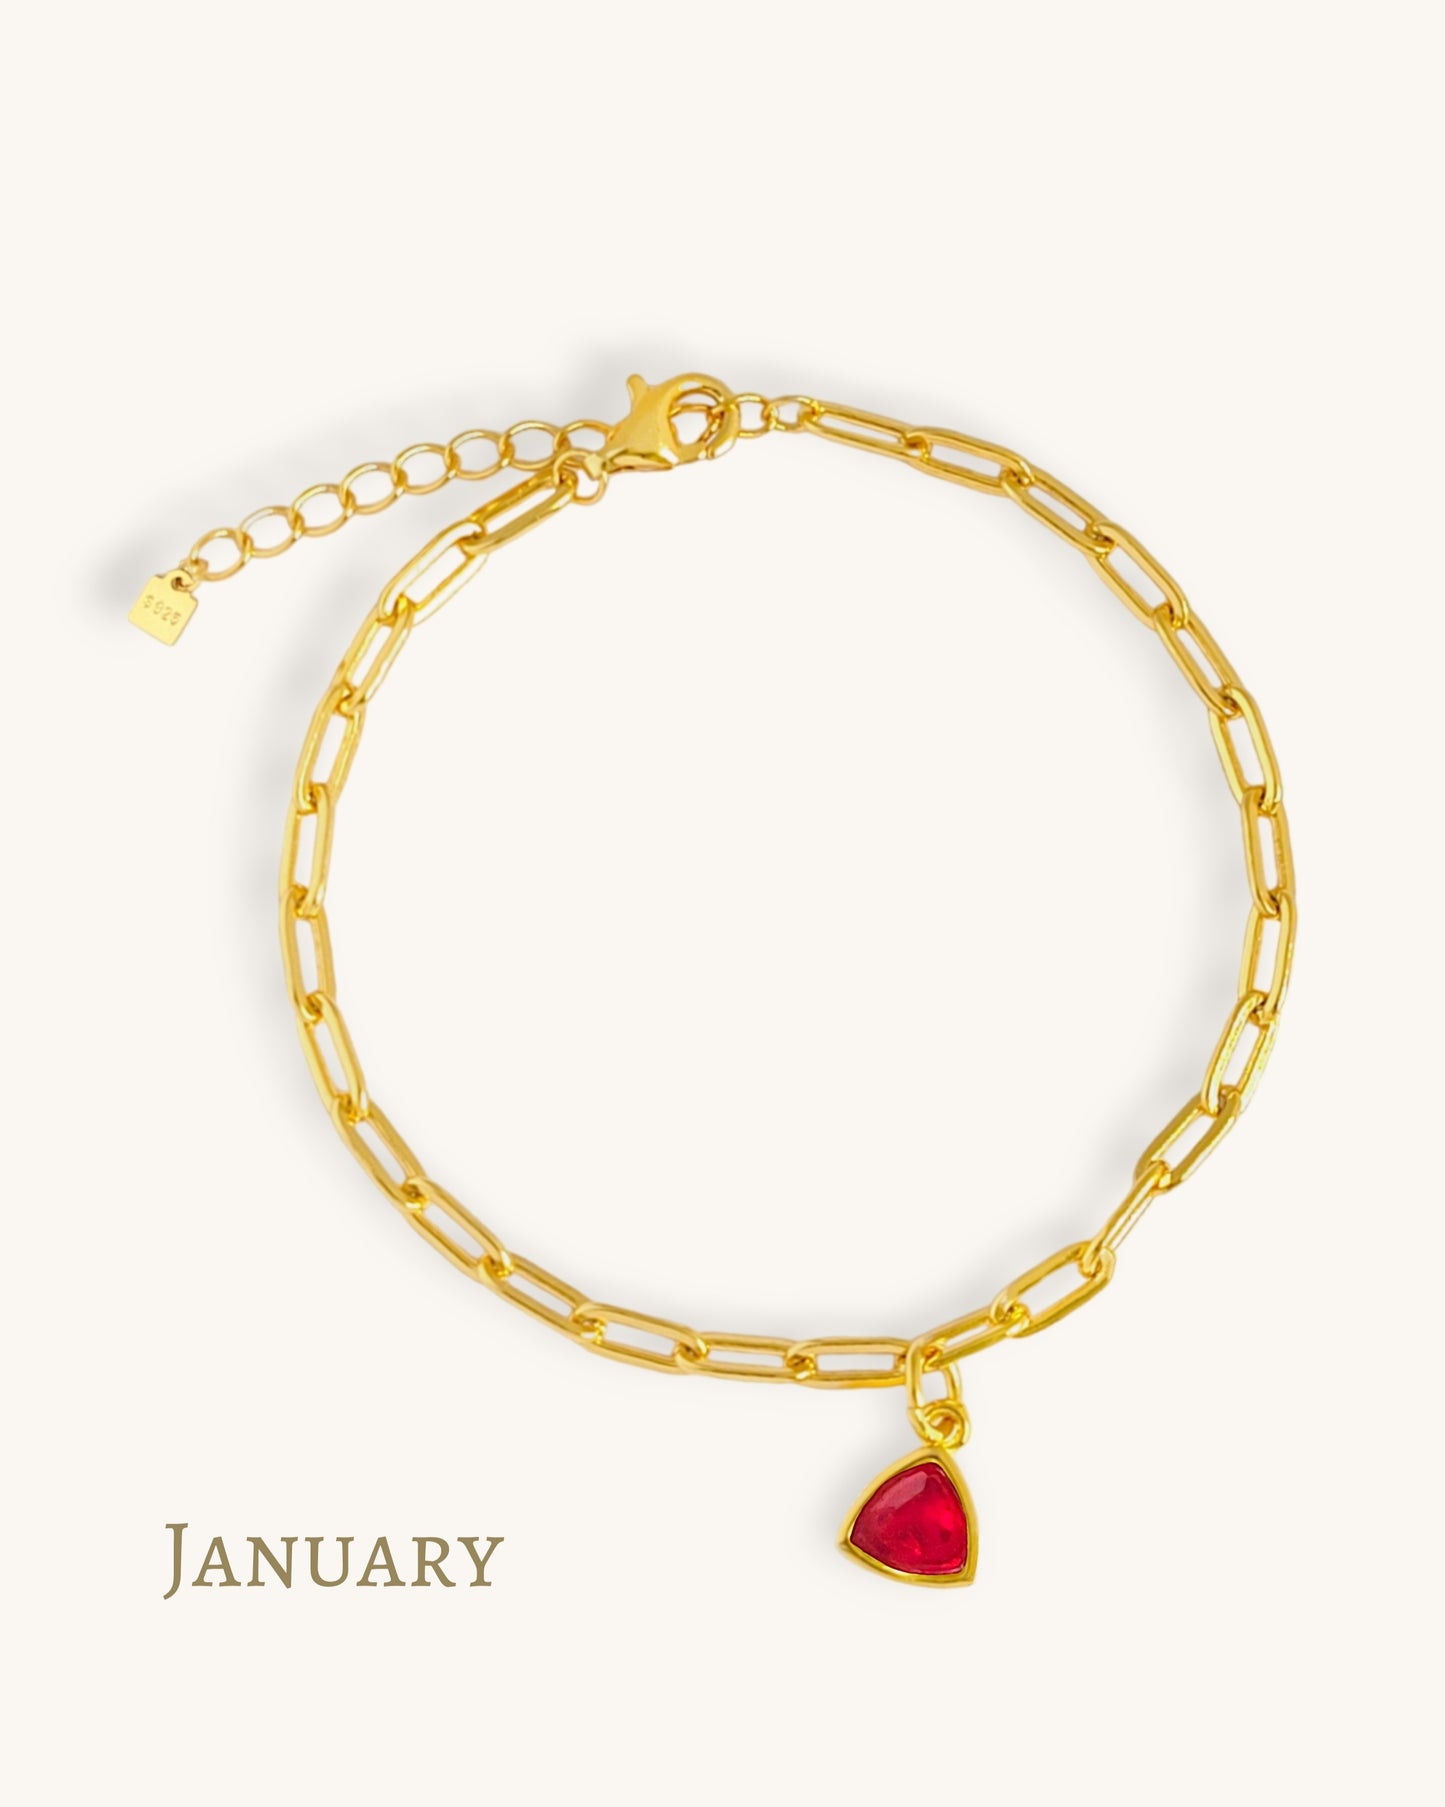 January Birthstone bracelet